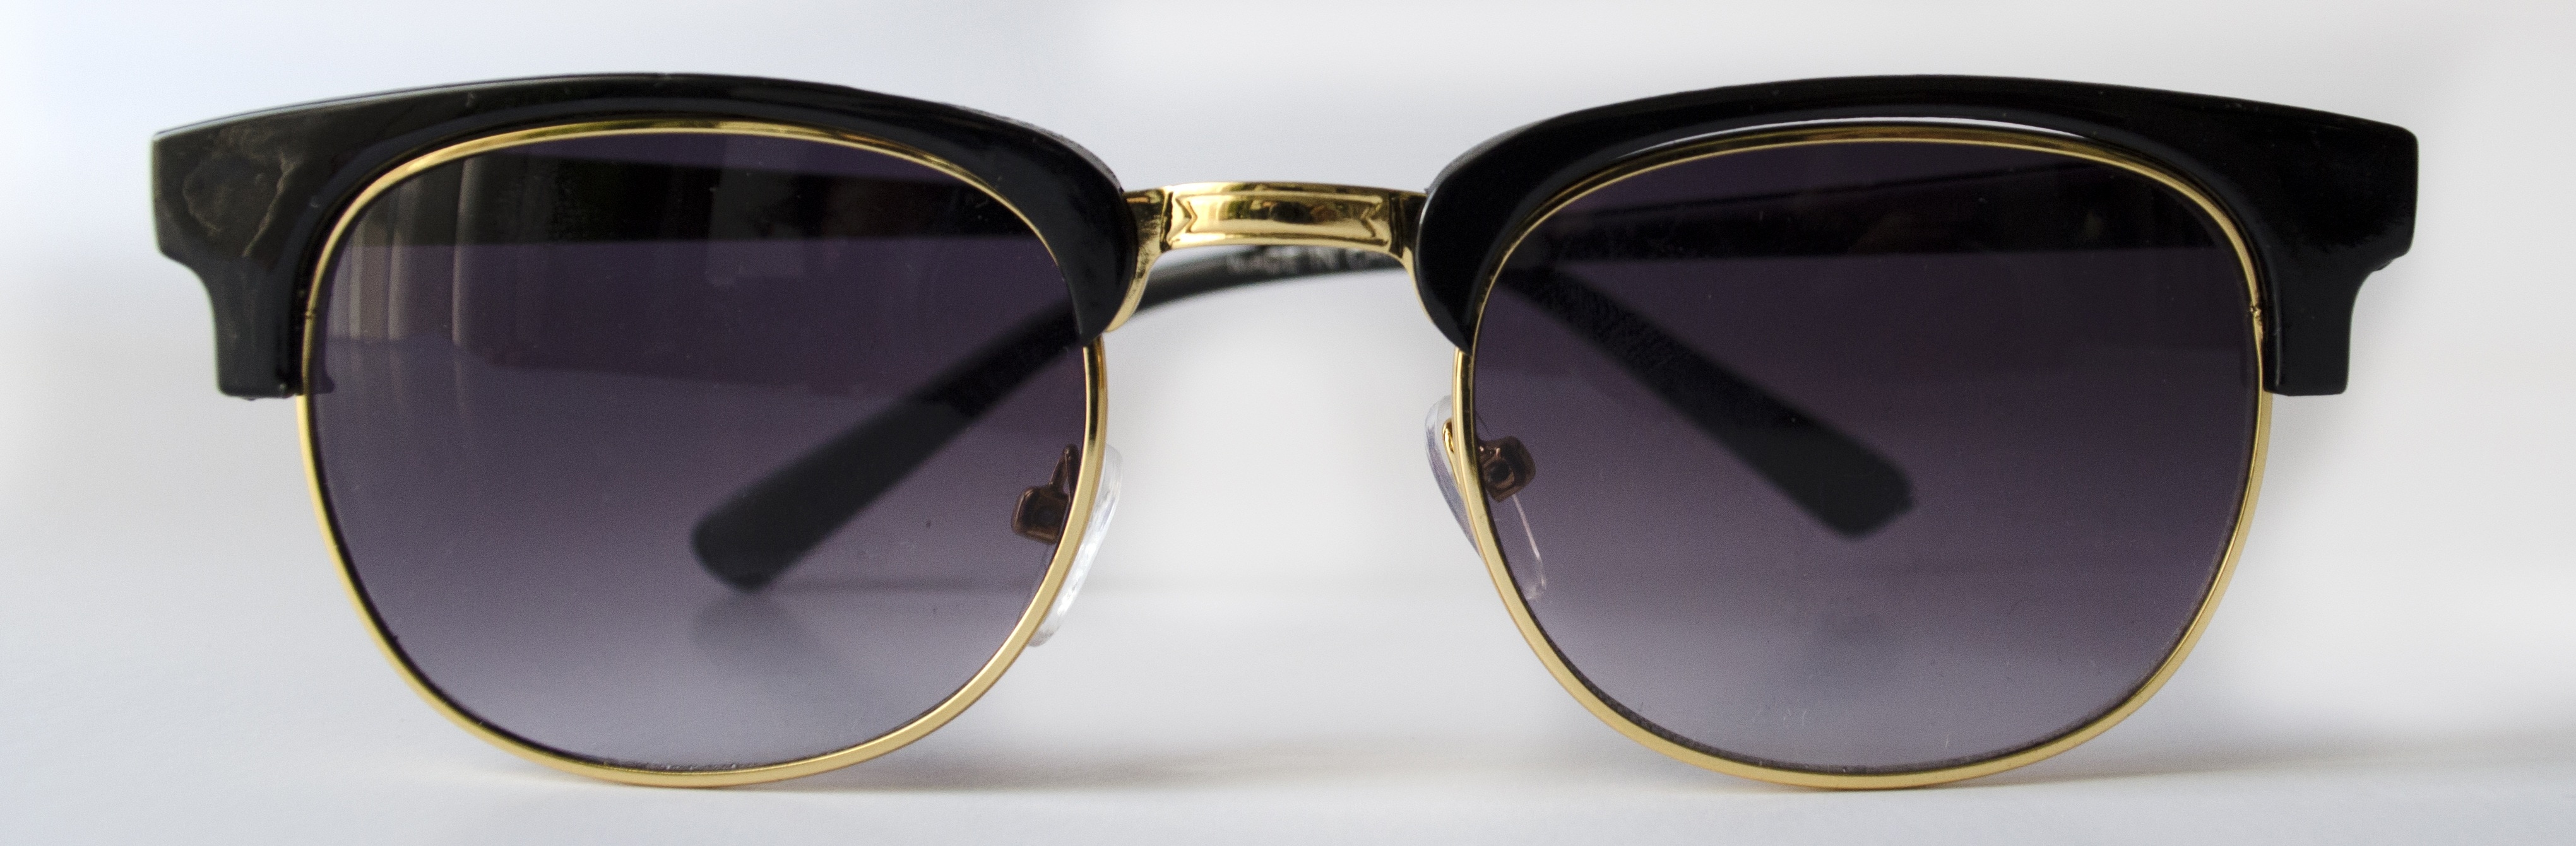 black clubmaster style sunglasses